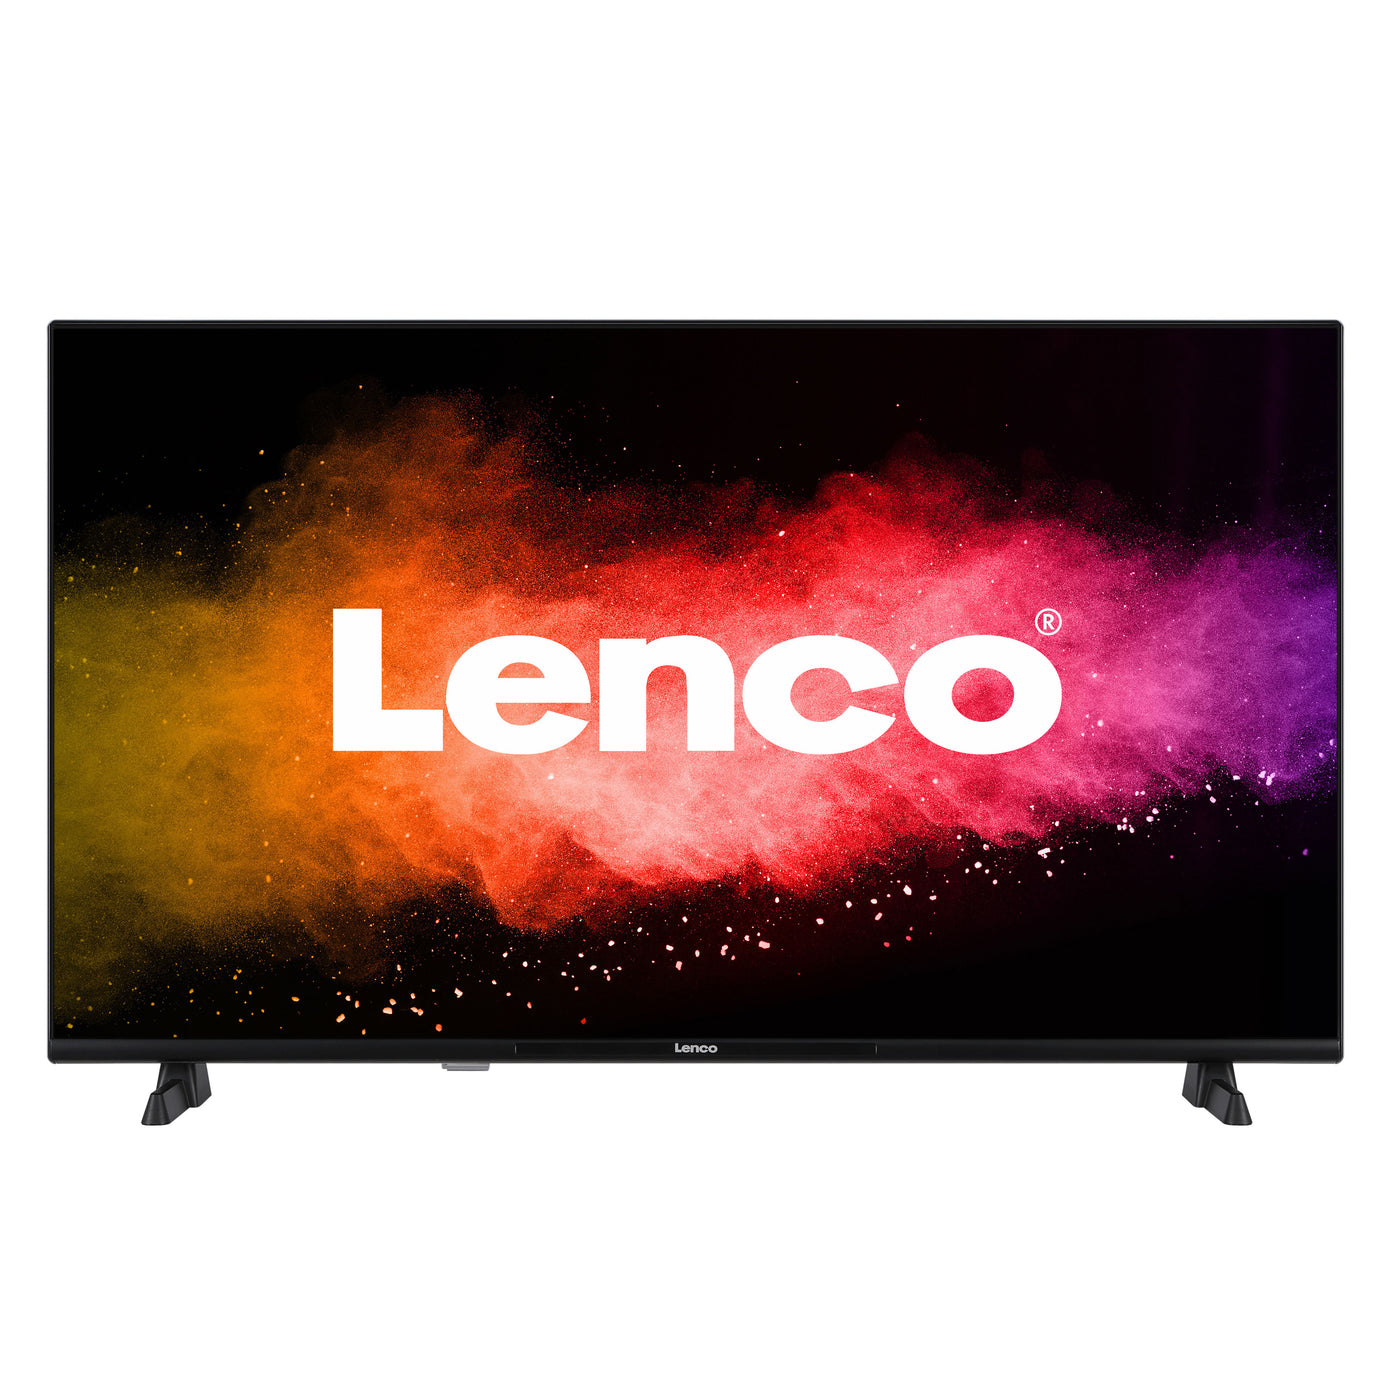 Lenco LED-4044BK - 40" Android Smart TV, Full HD, black